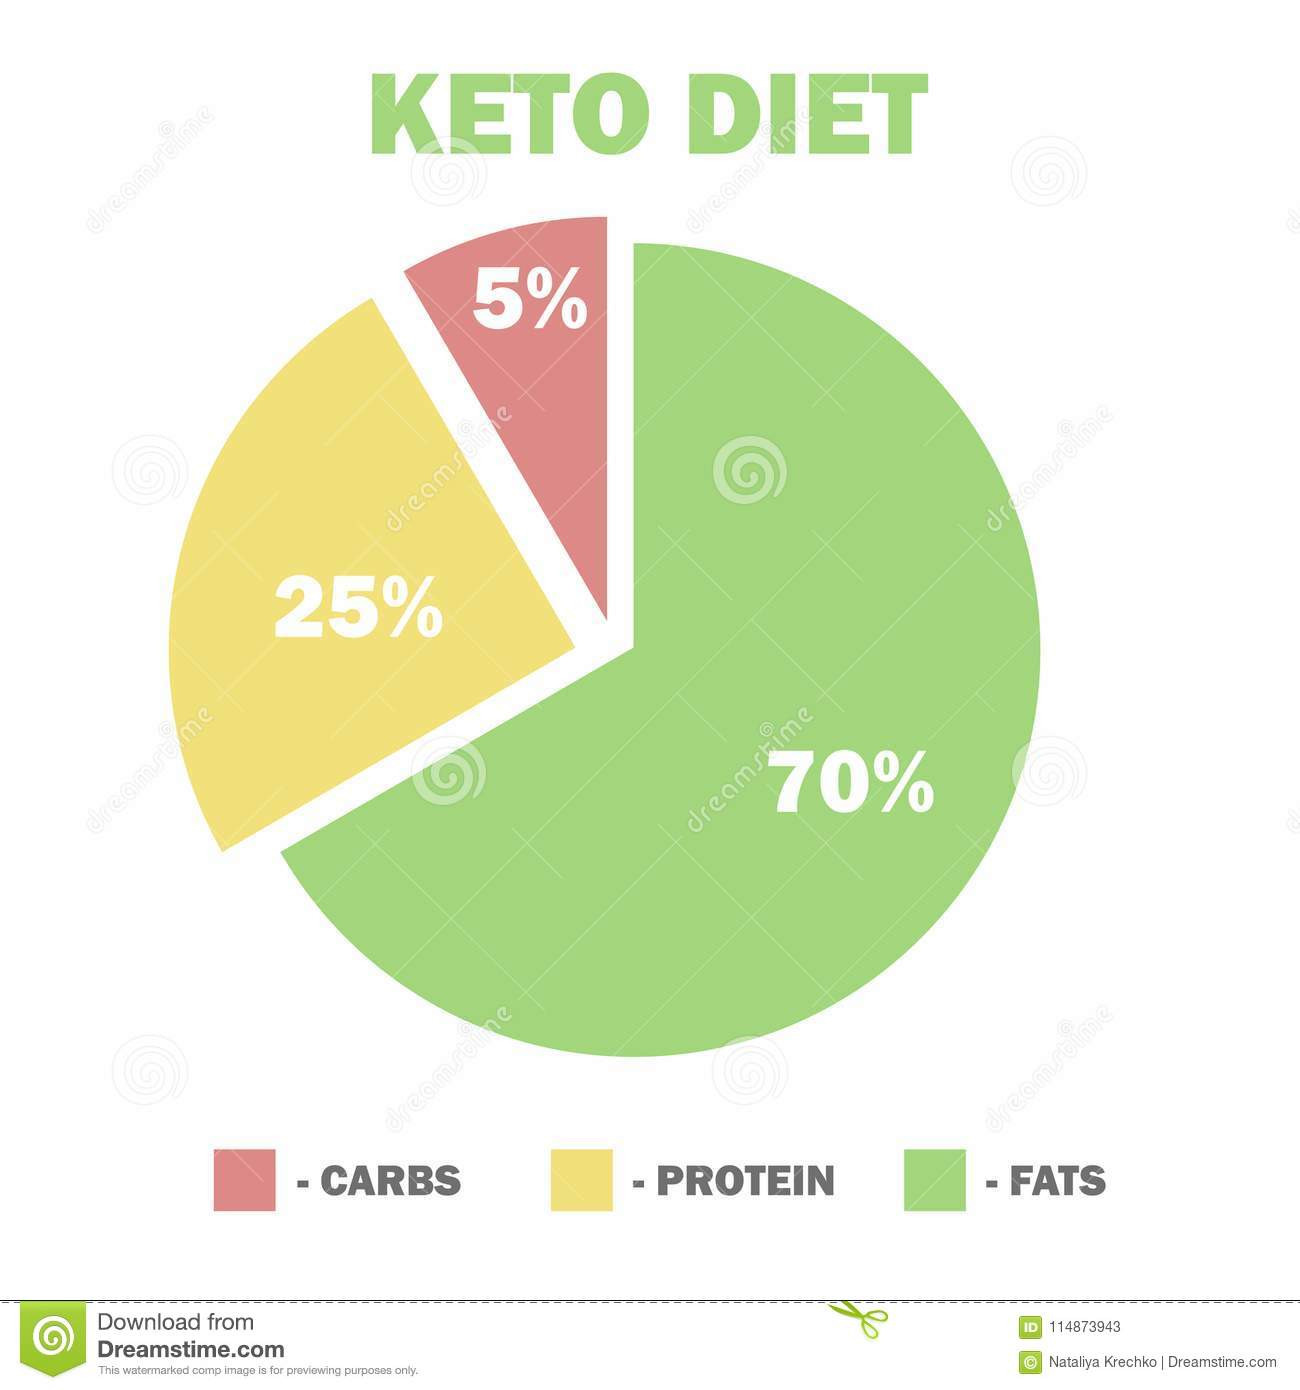 Macros For Low Carb Diet
 Ketogenic Diet Macros Diagram Low Carbs High Healthy Fat